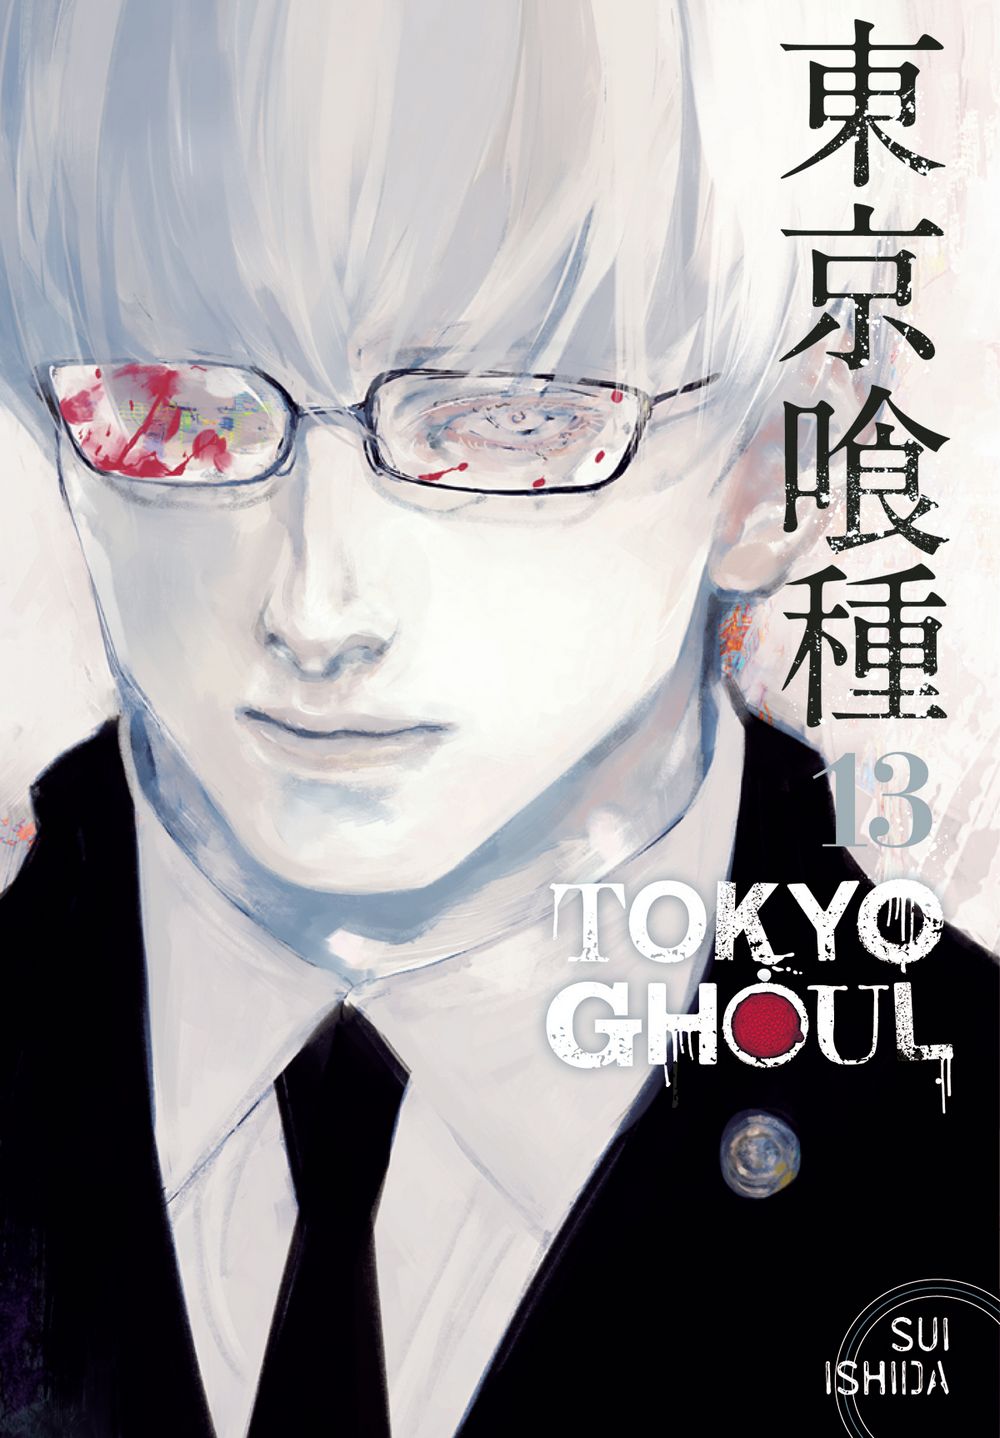 Tokyo Ghoul GN VOL 13